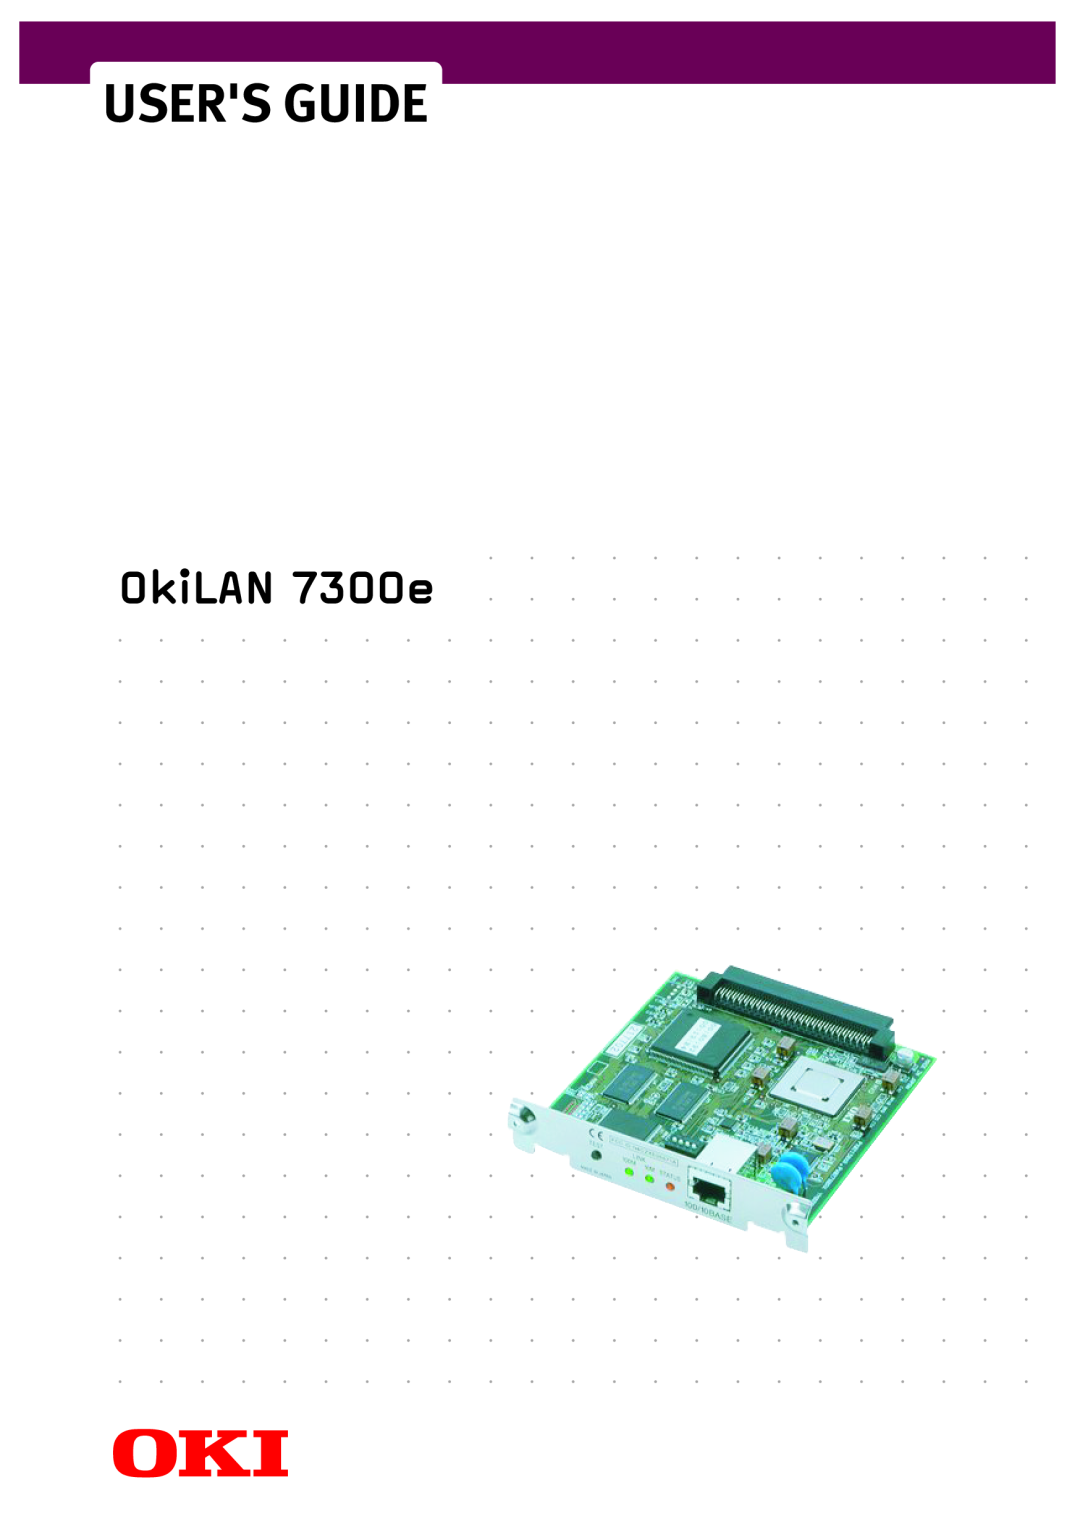 Oki manual Users Guide, OkiLAN 7300e 